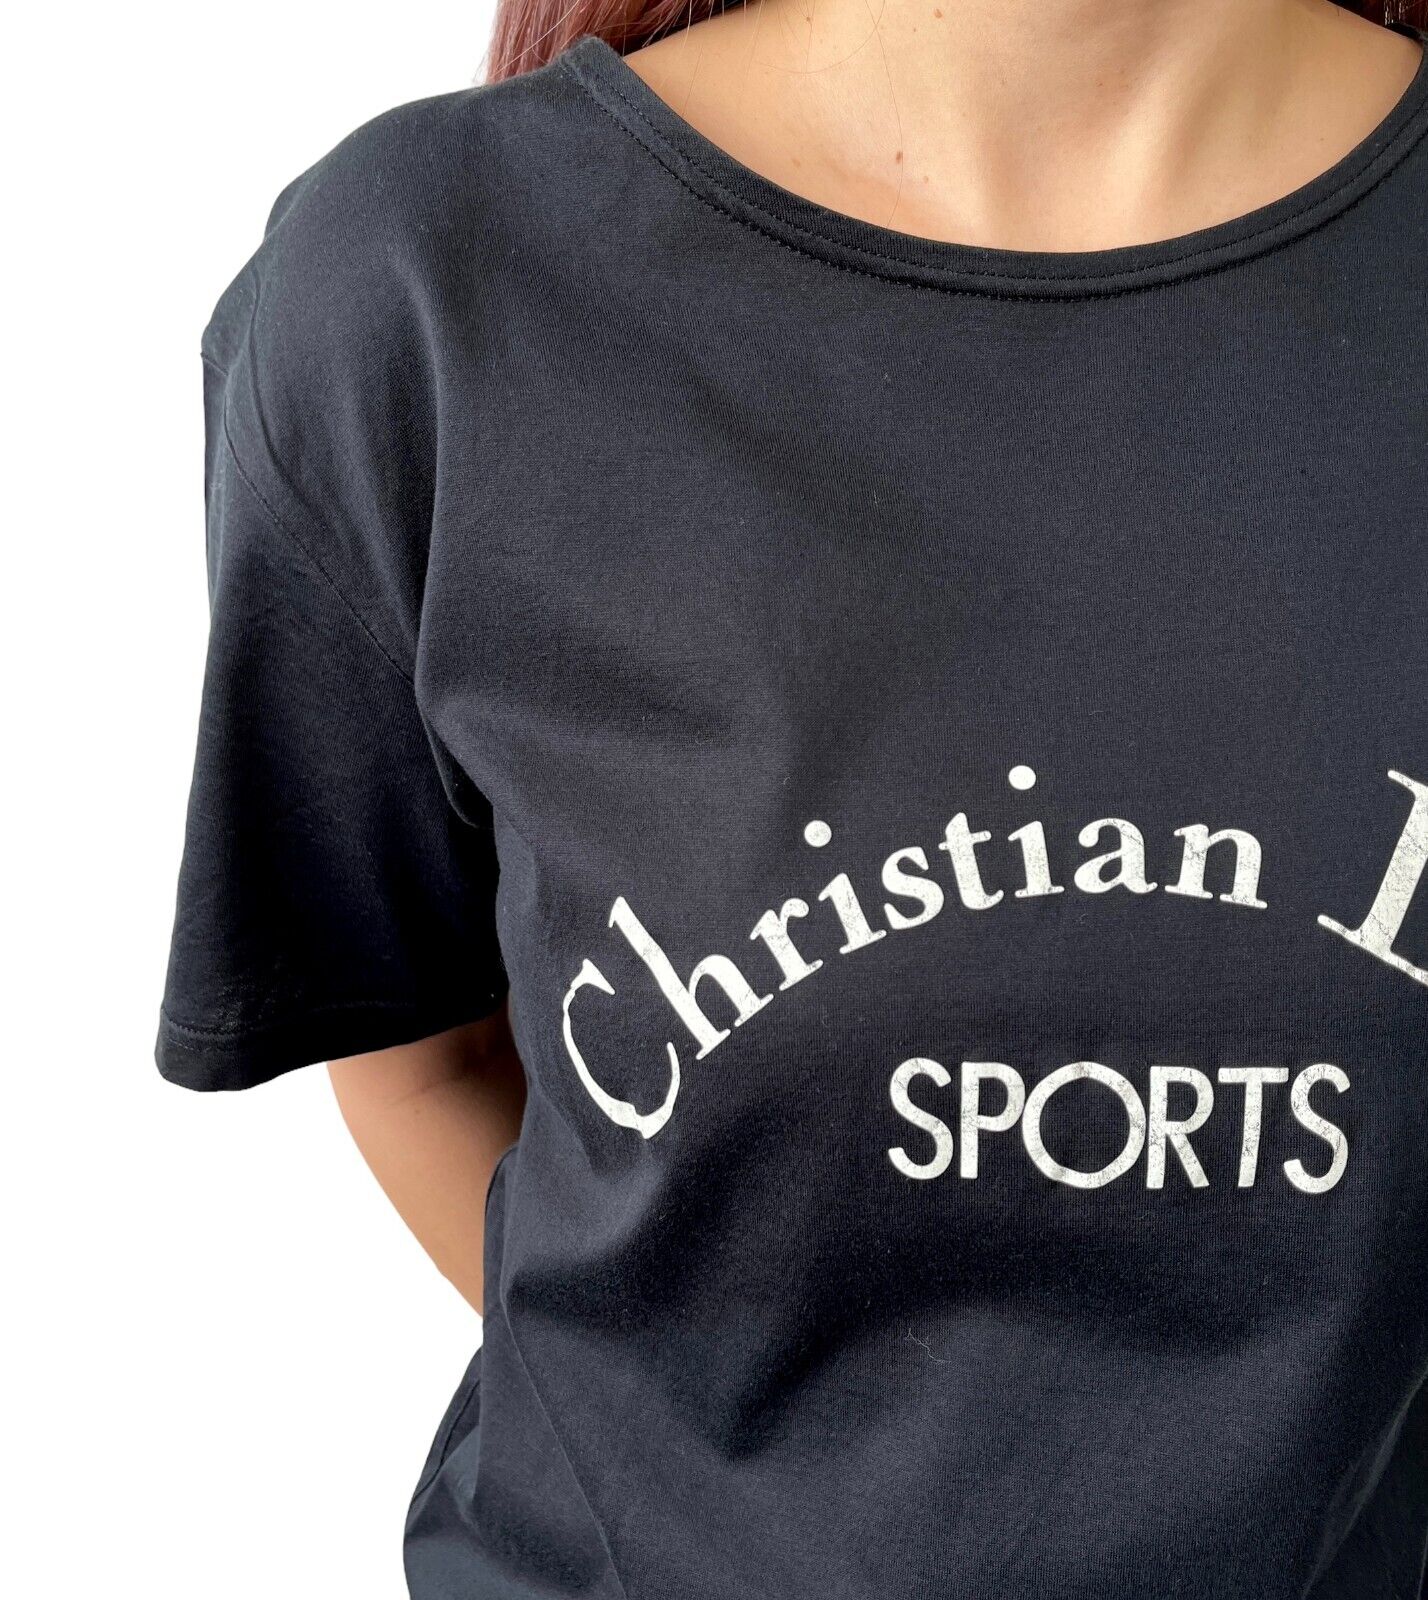 Christian Dior Sport Vintage Big Logo T-shirt #L Black White Cotton RankAB